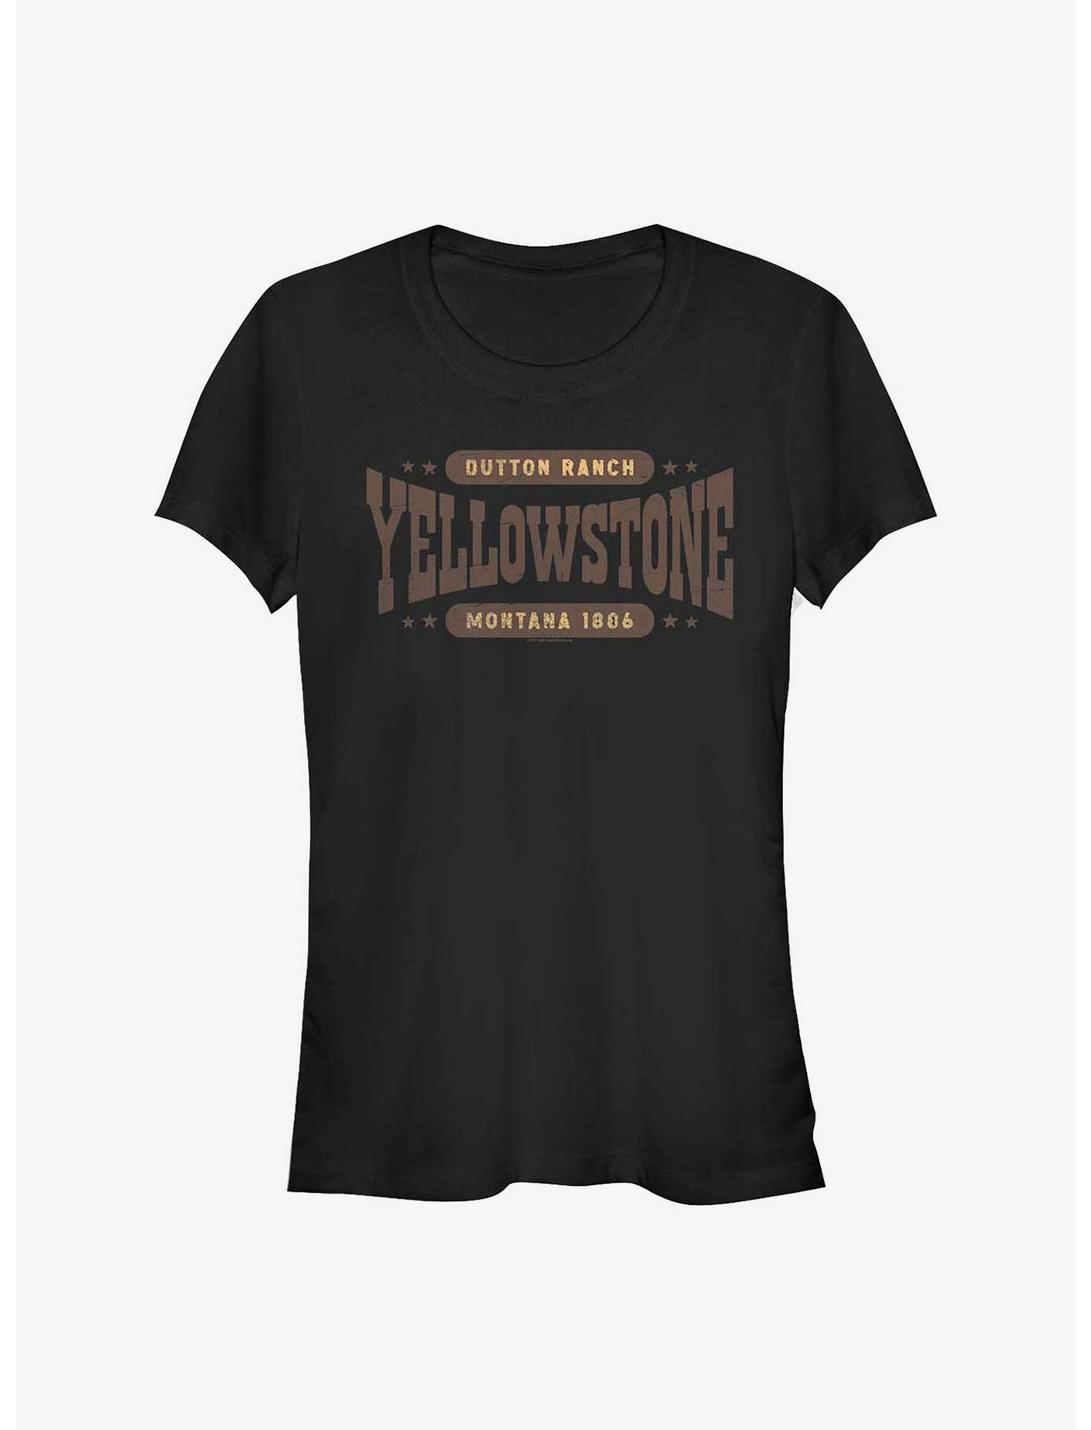 Yellowstone Dutton Ranch Montana Girls T-Shirt, BLACK, hi-res